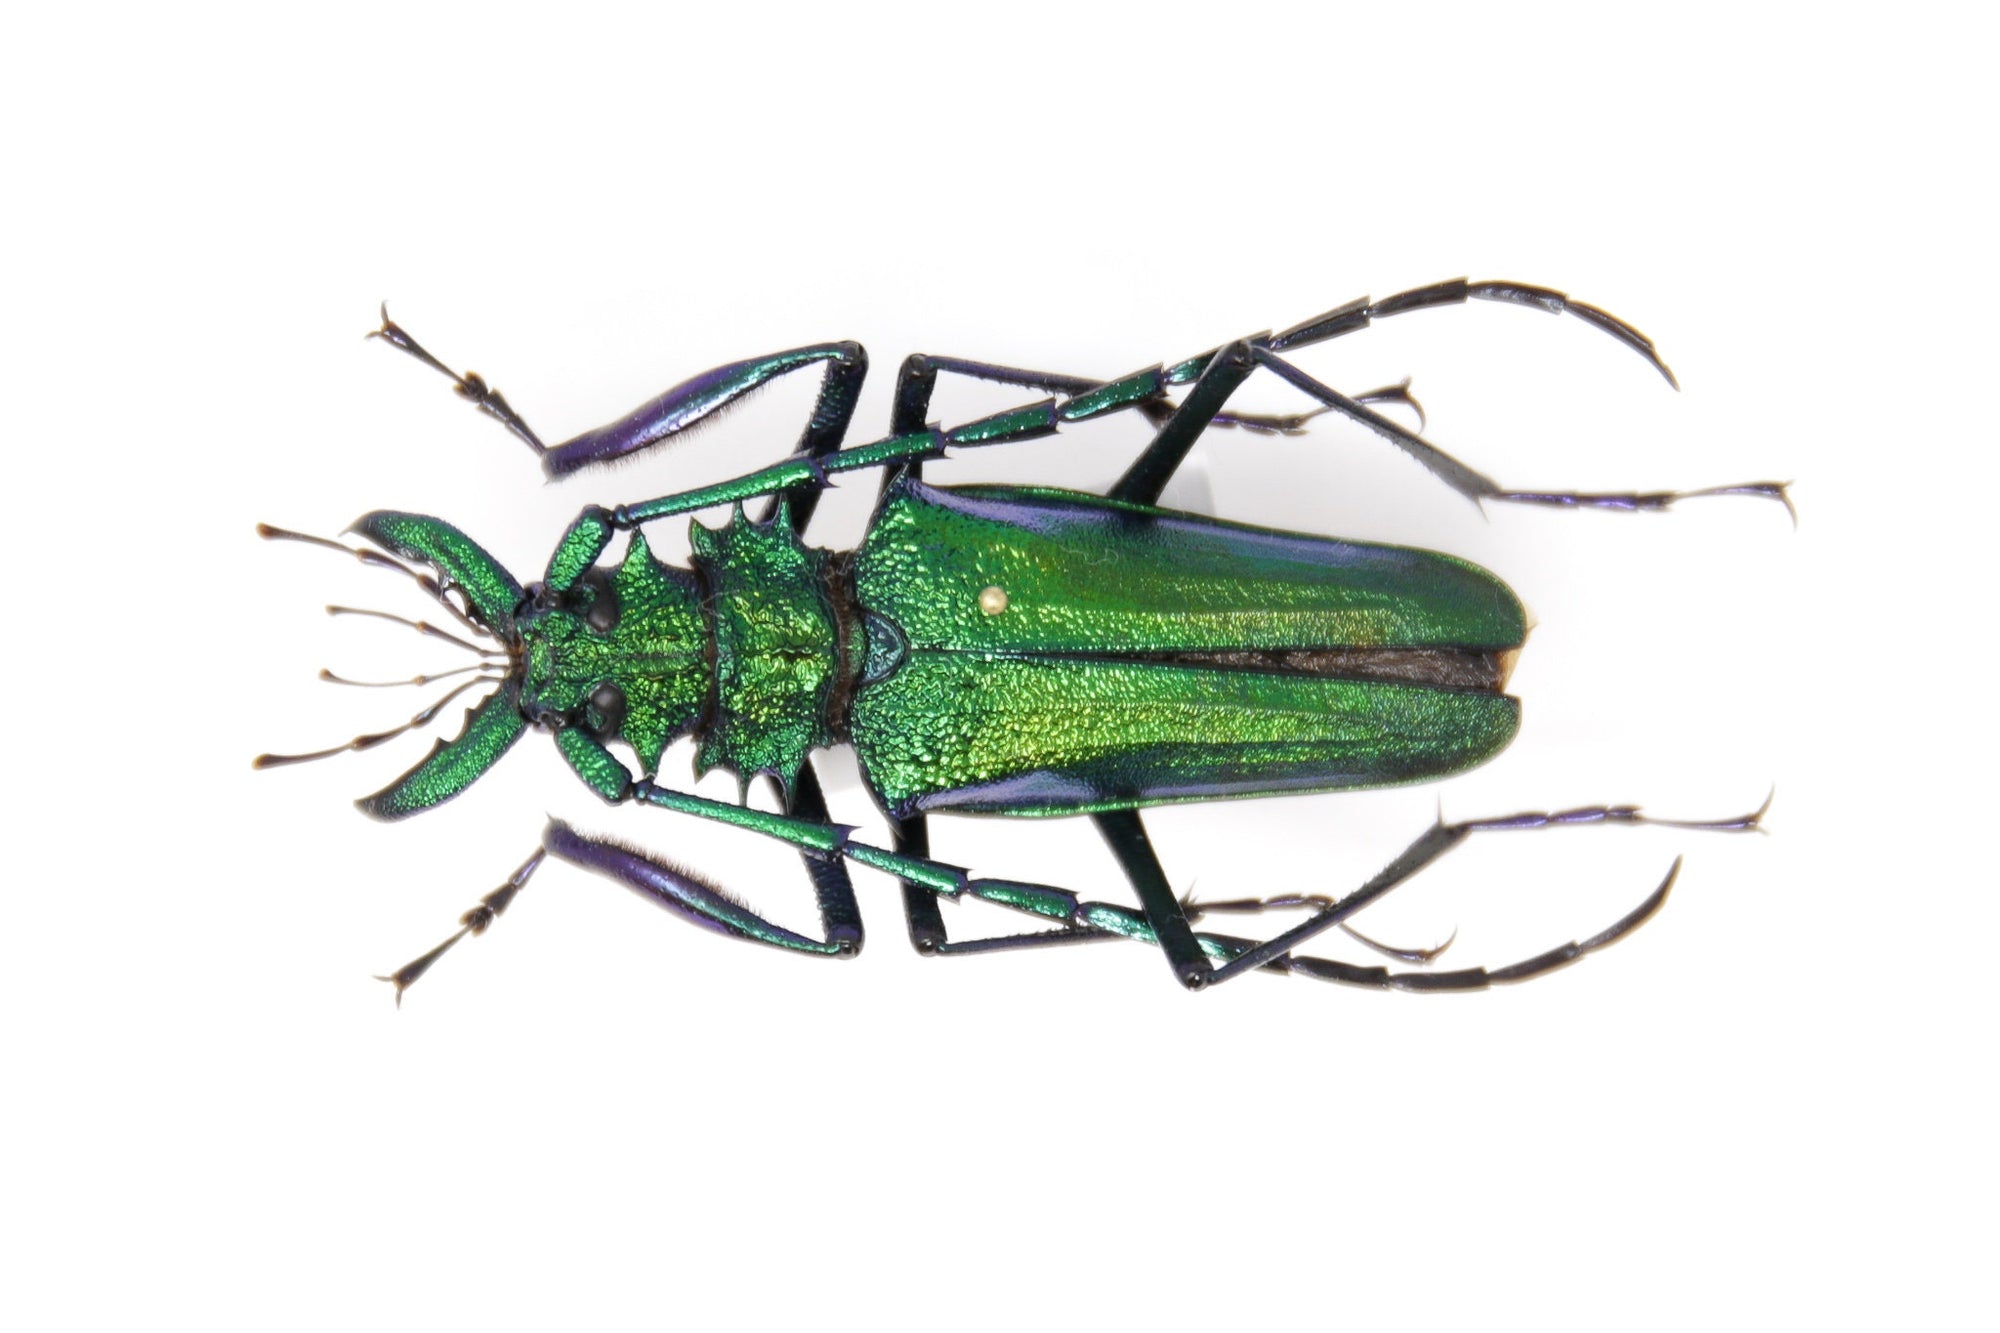 Psalidognathus friendii MALE Colombia, A1 Entomology Set Pinned Real Beetle Specimen